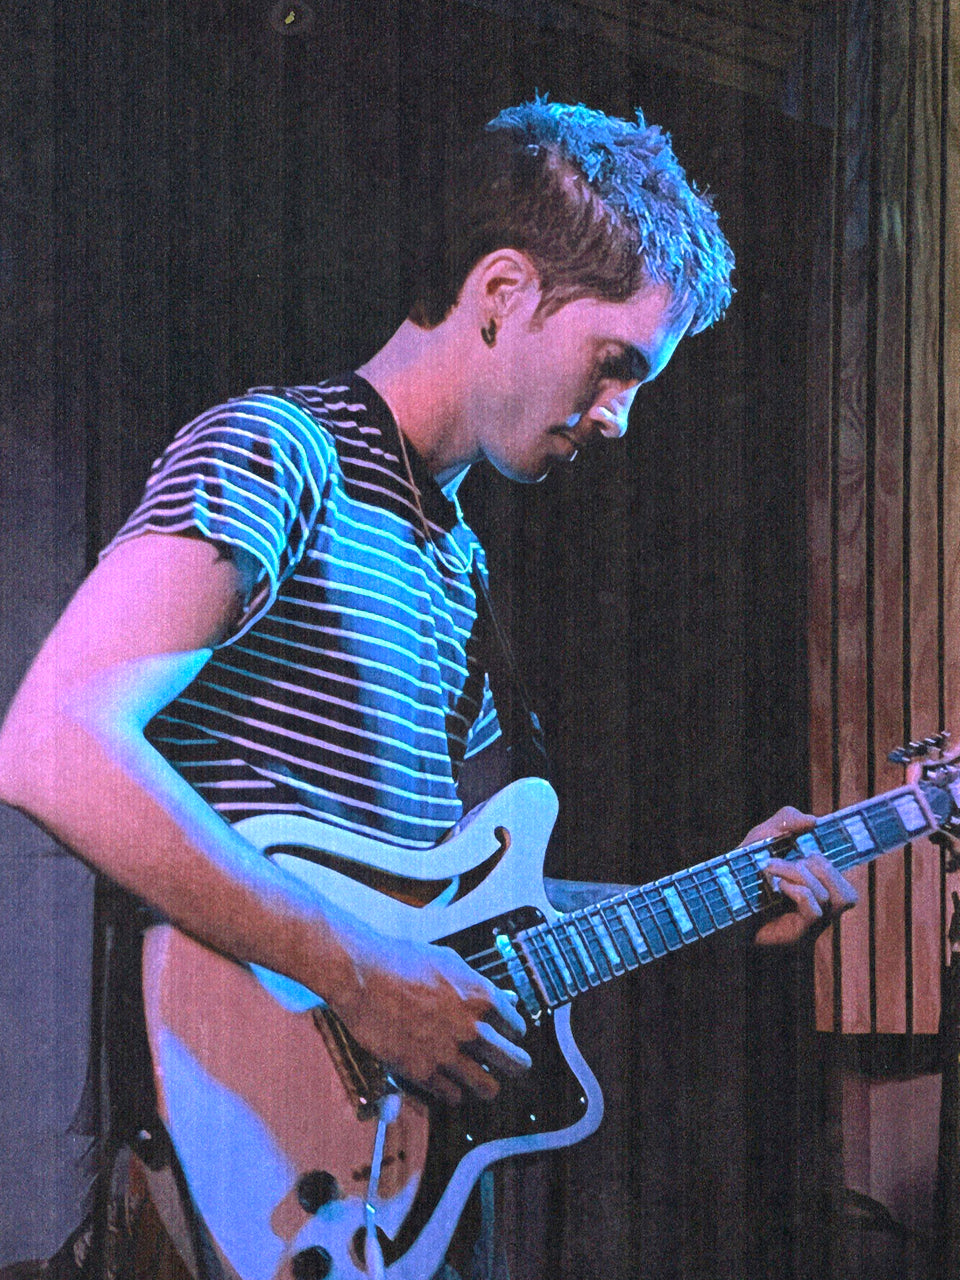 ok, tyler playing guitar in striped shirt.